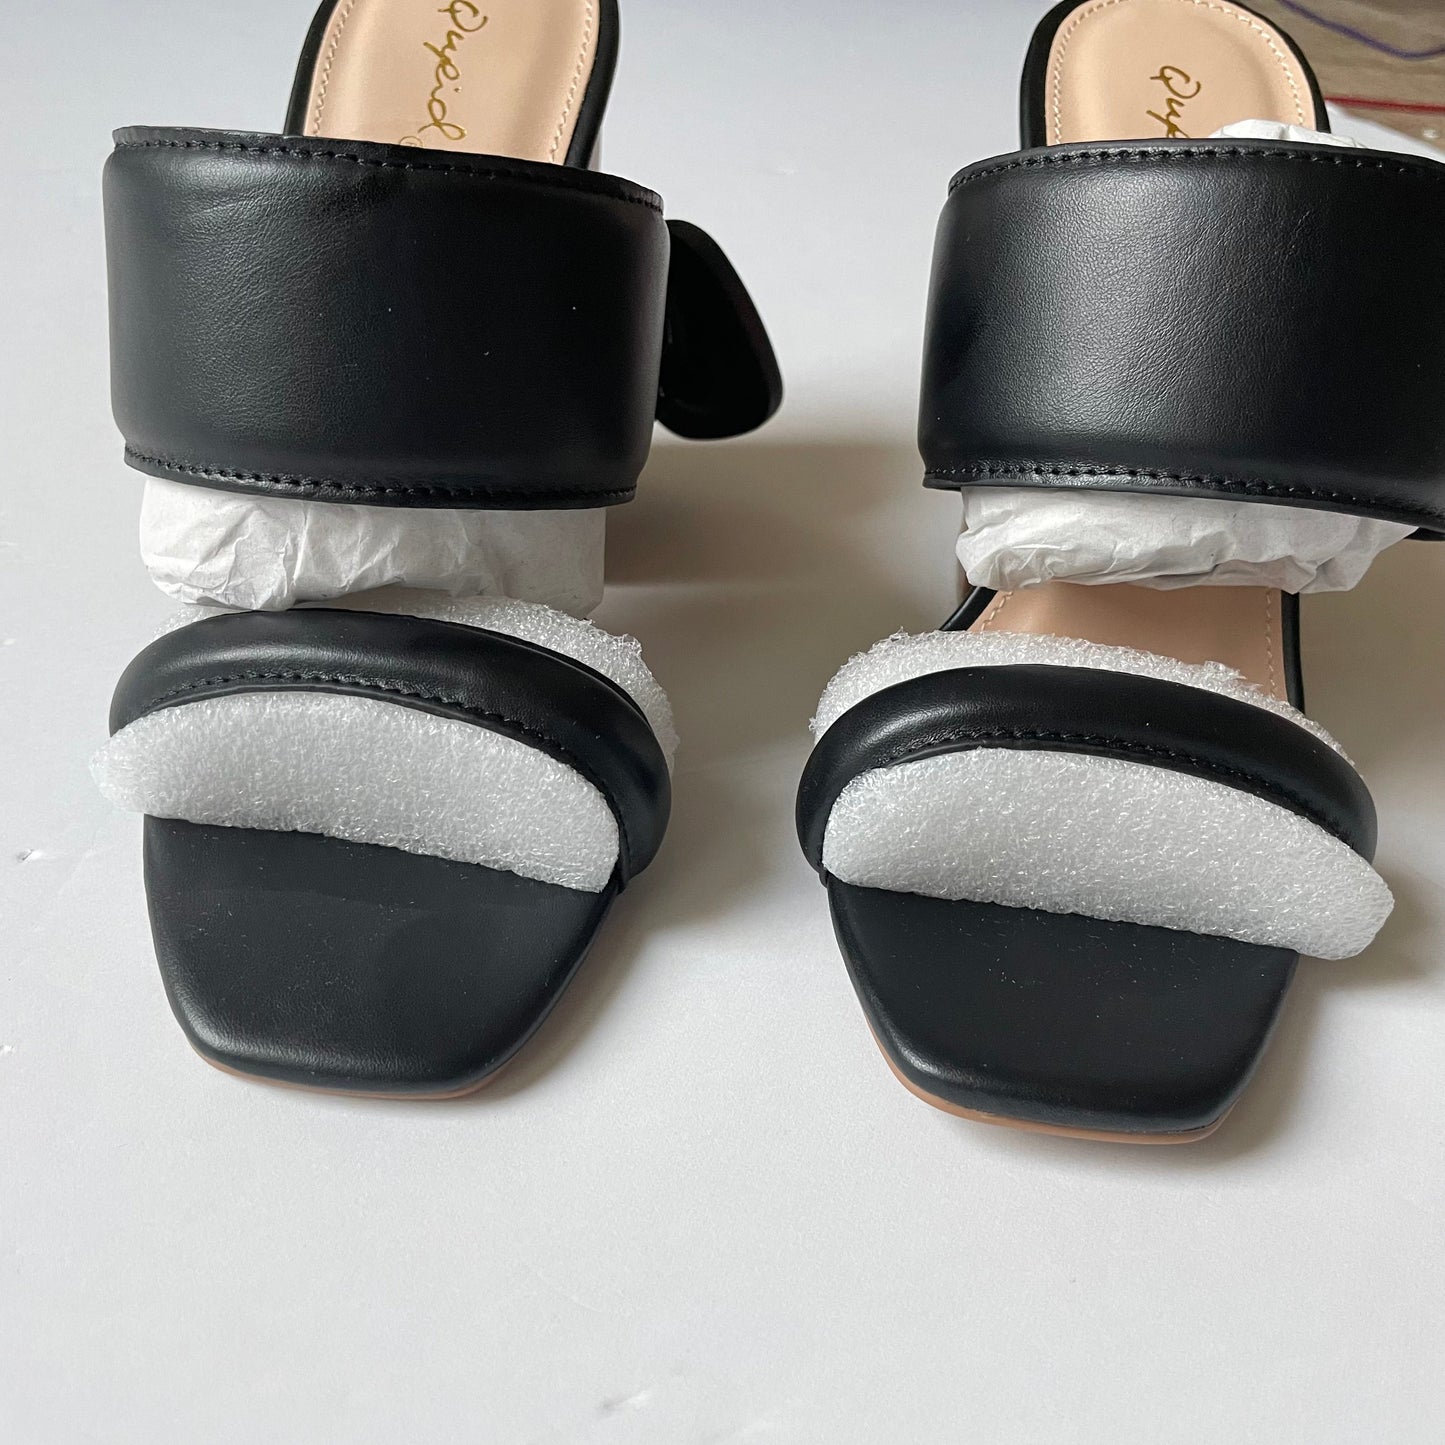 Black Shoes Heels Block Qupid, Size 7